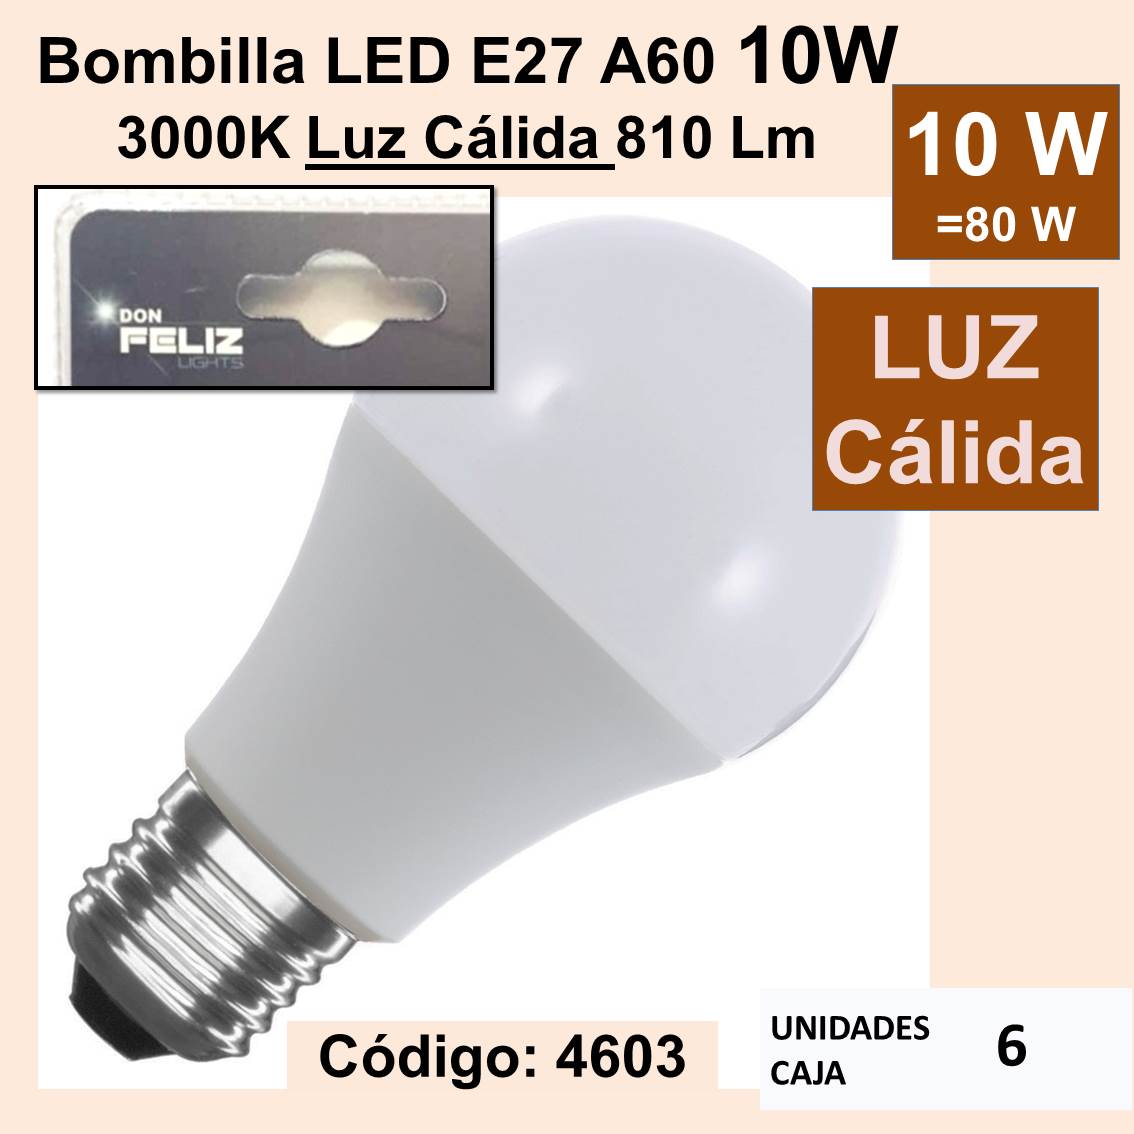 Bombilla LED E27 A60 10Watios 3000K Luz Cálida 810 Lm DON FELIZ – COMERCIAL  ANTONIO